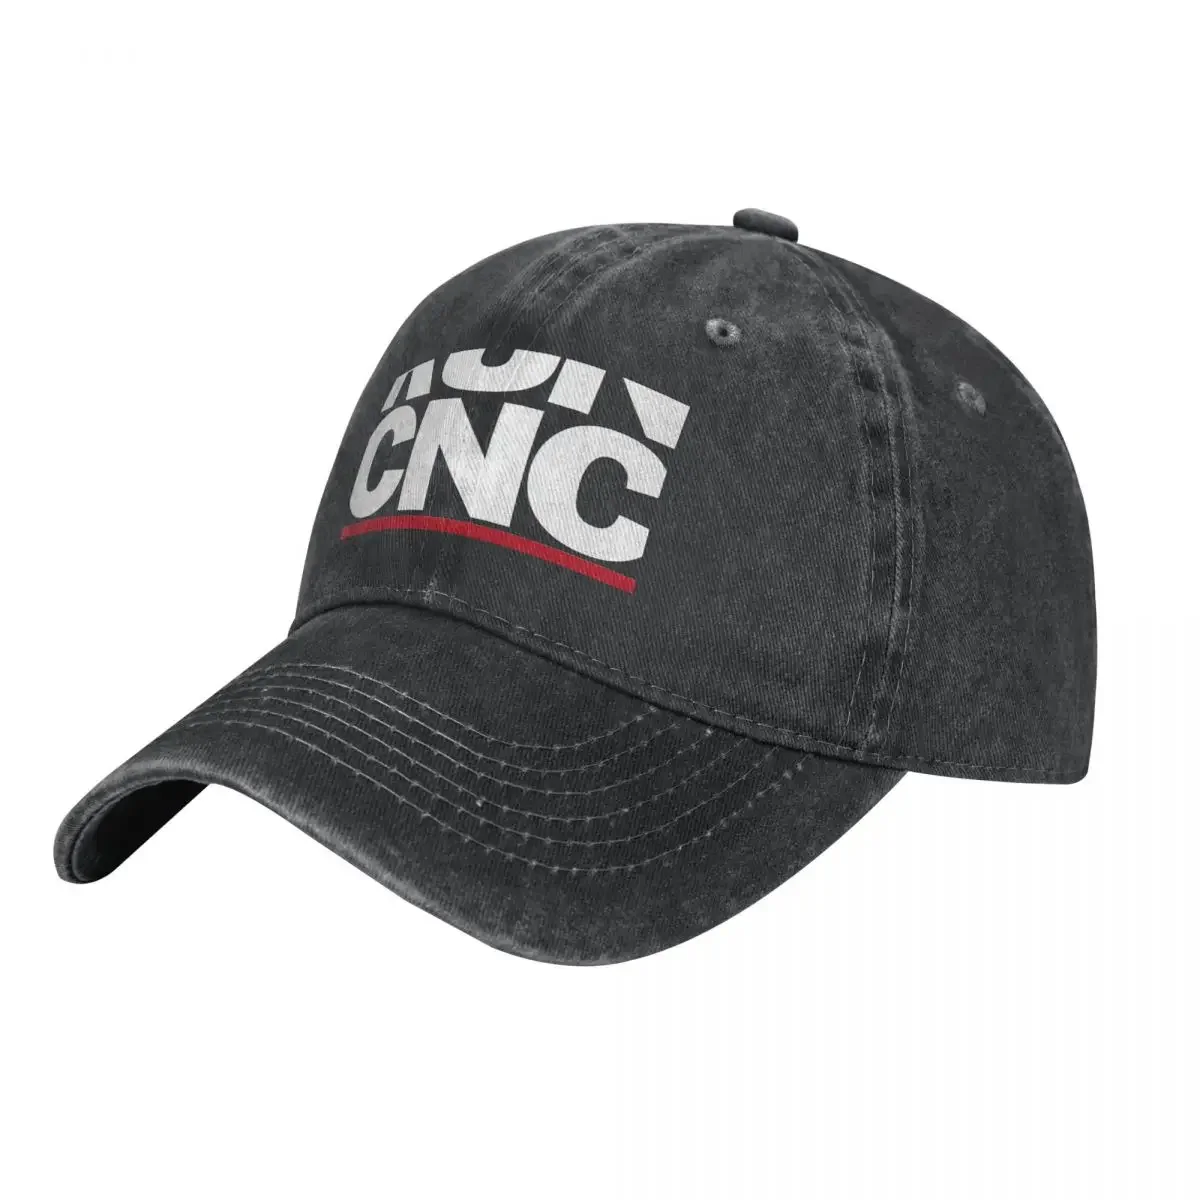 RUN CNC Cowboy Hat Trucker Hat Hat Man Luxury Mens Tennis Women's цена и фото